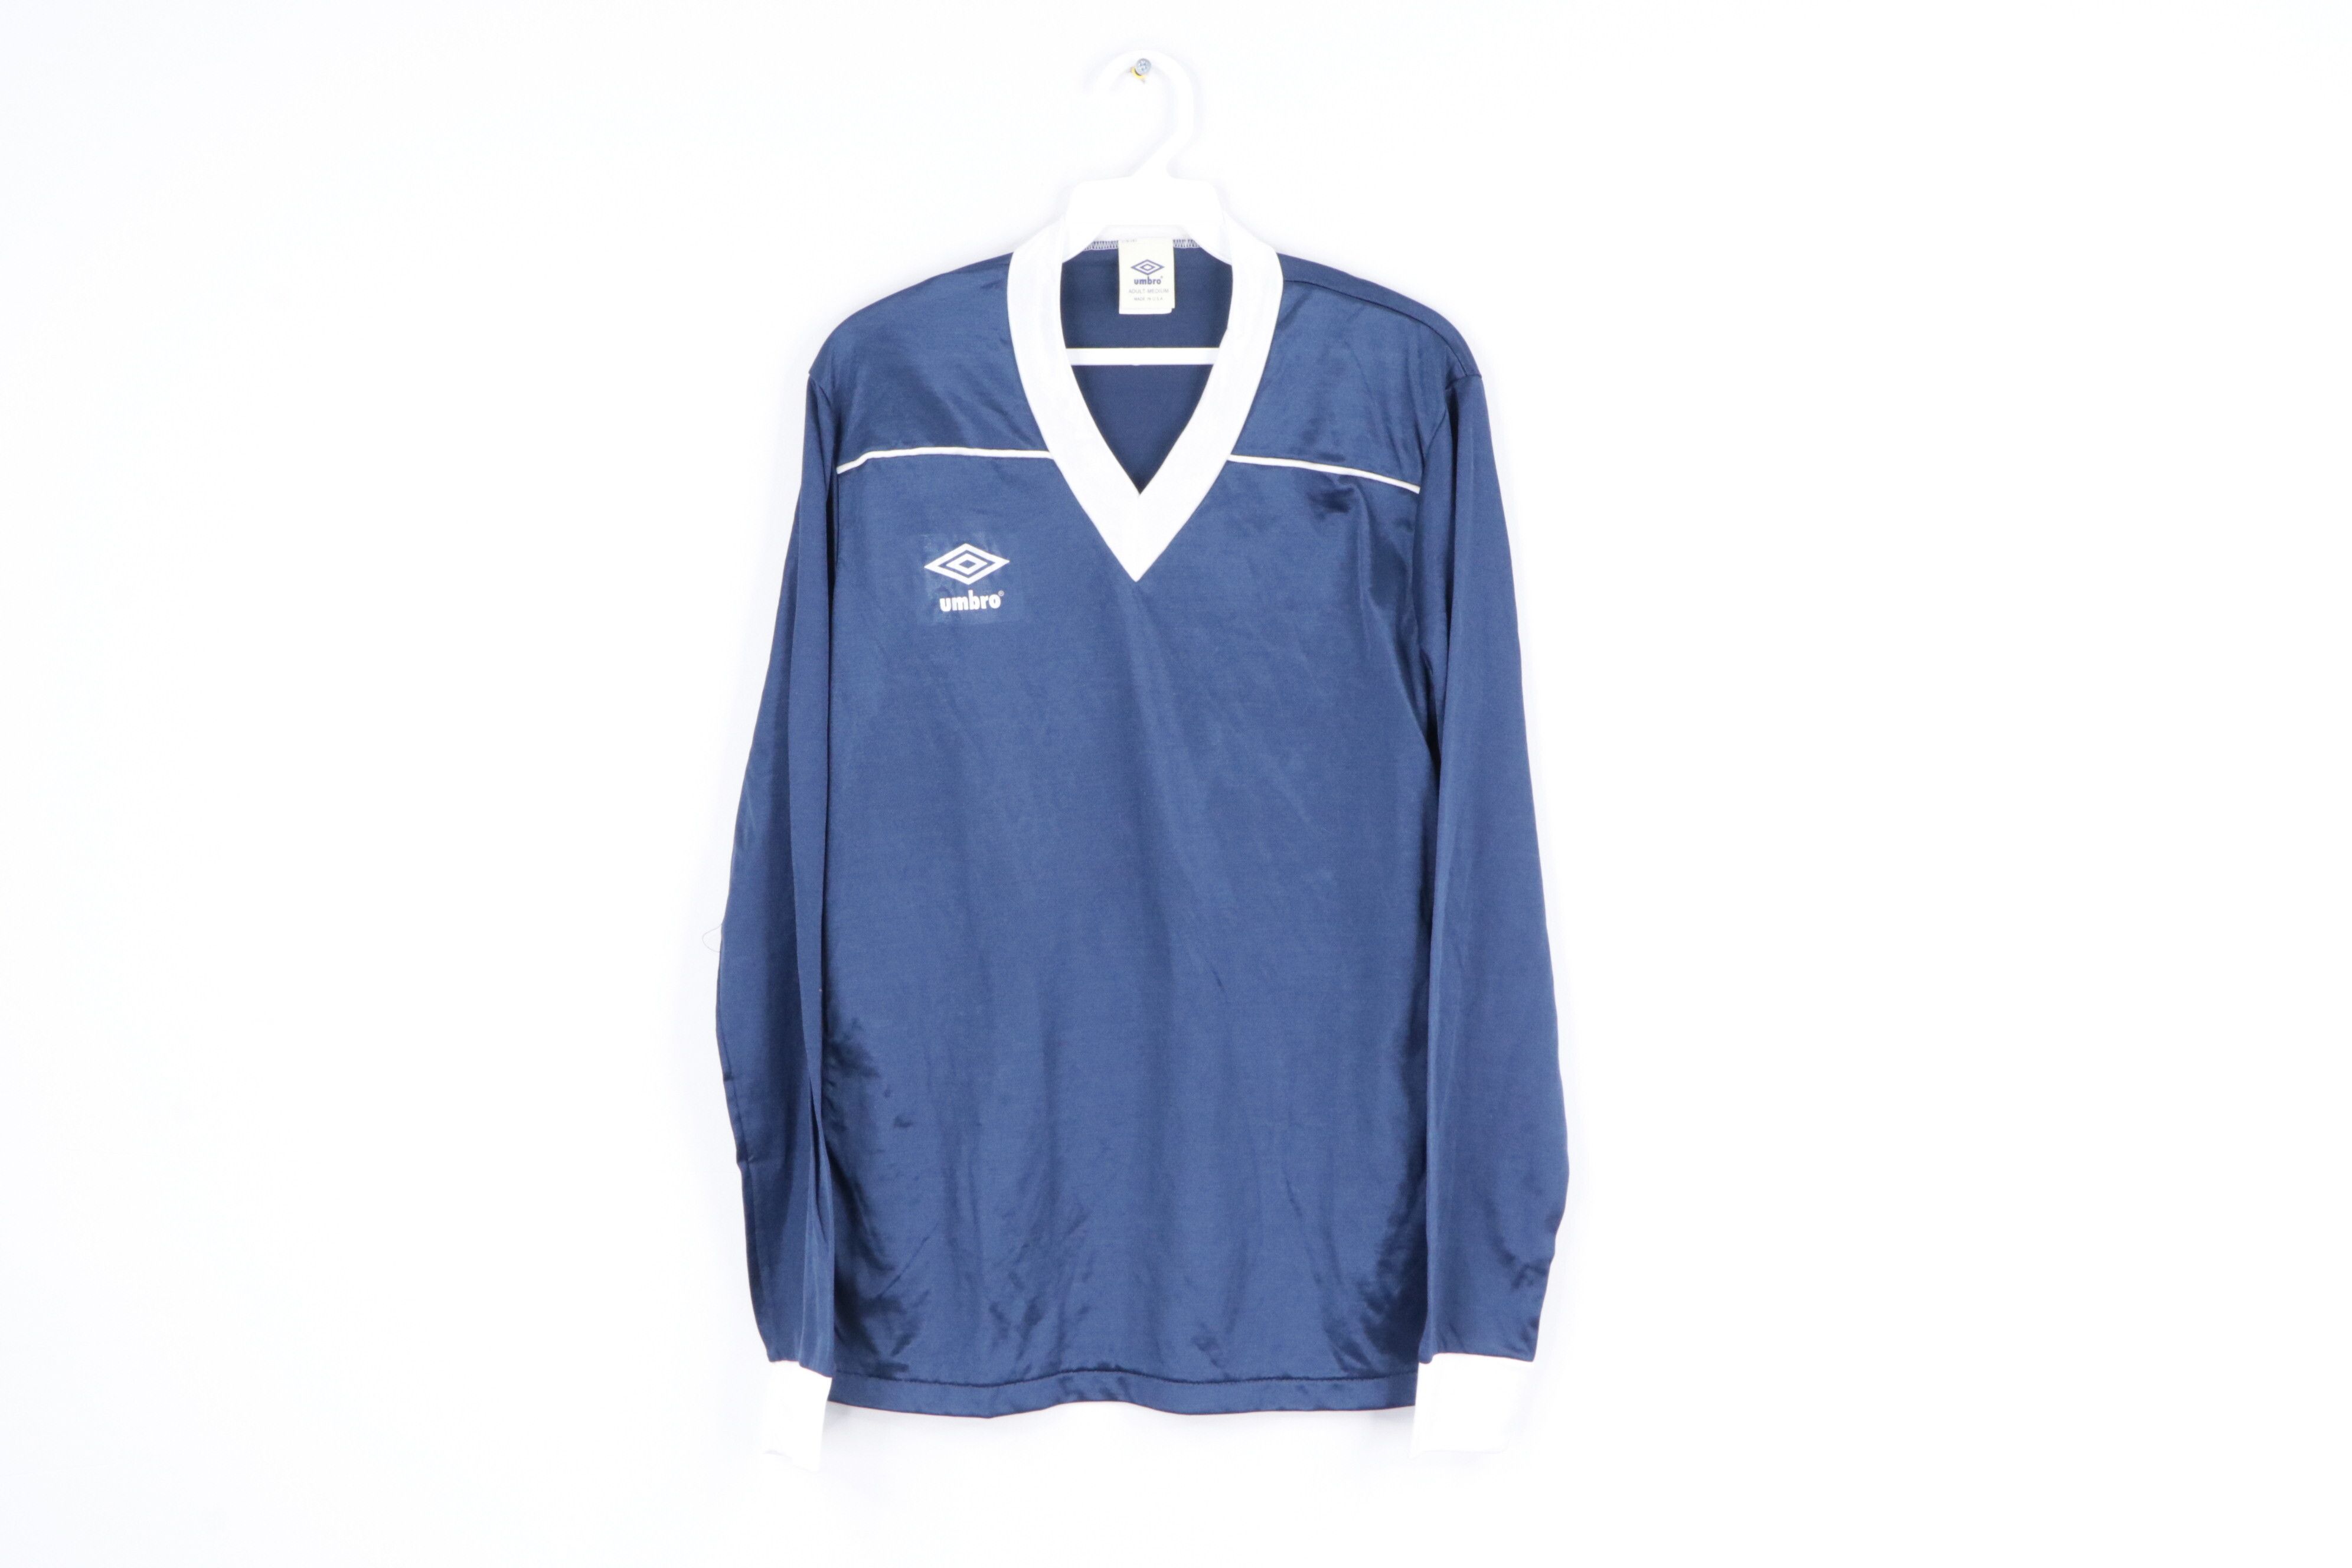 Vintage NOS Vintage 80s Umbro Long Sleeve Soccer Jersey Navy Blue Size US M / EU 48-50 / 2 - 1 Preview